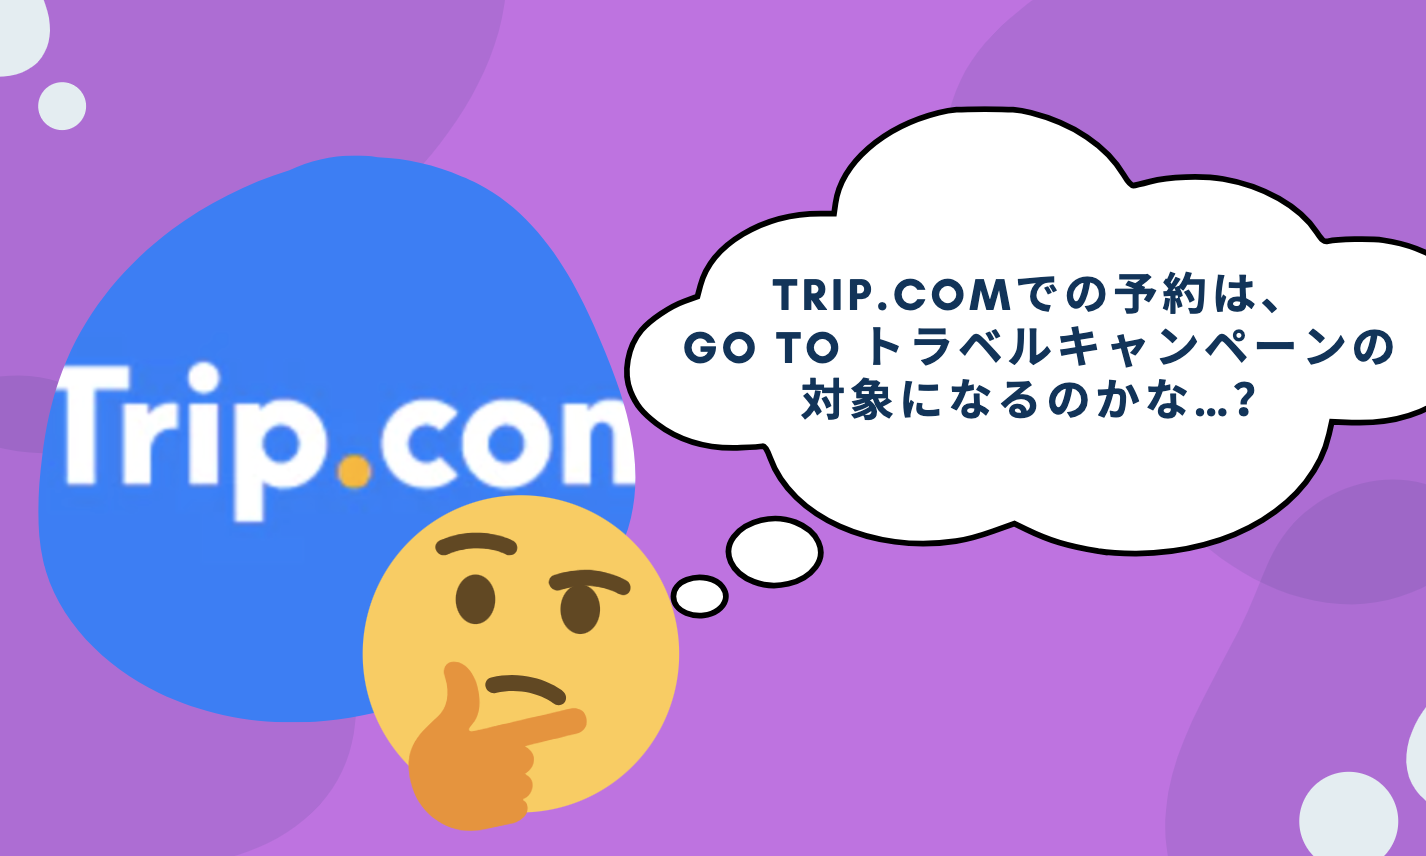 Trip.comはGo To キャンペーン対象